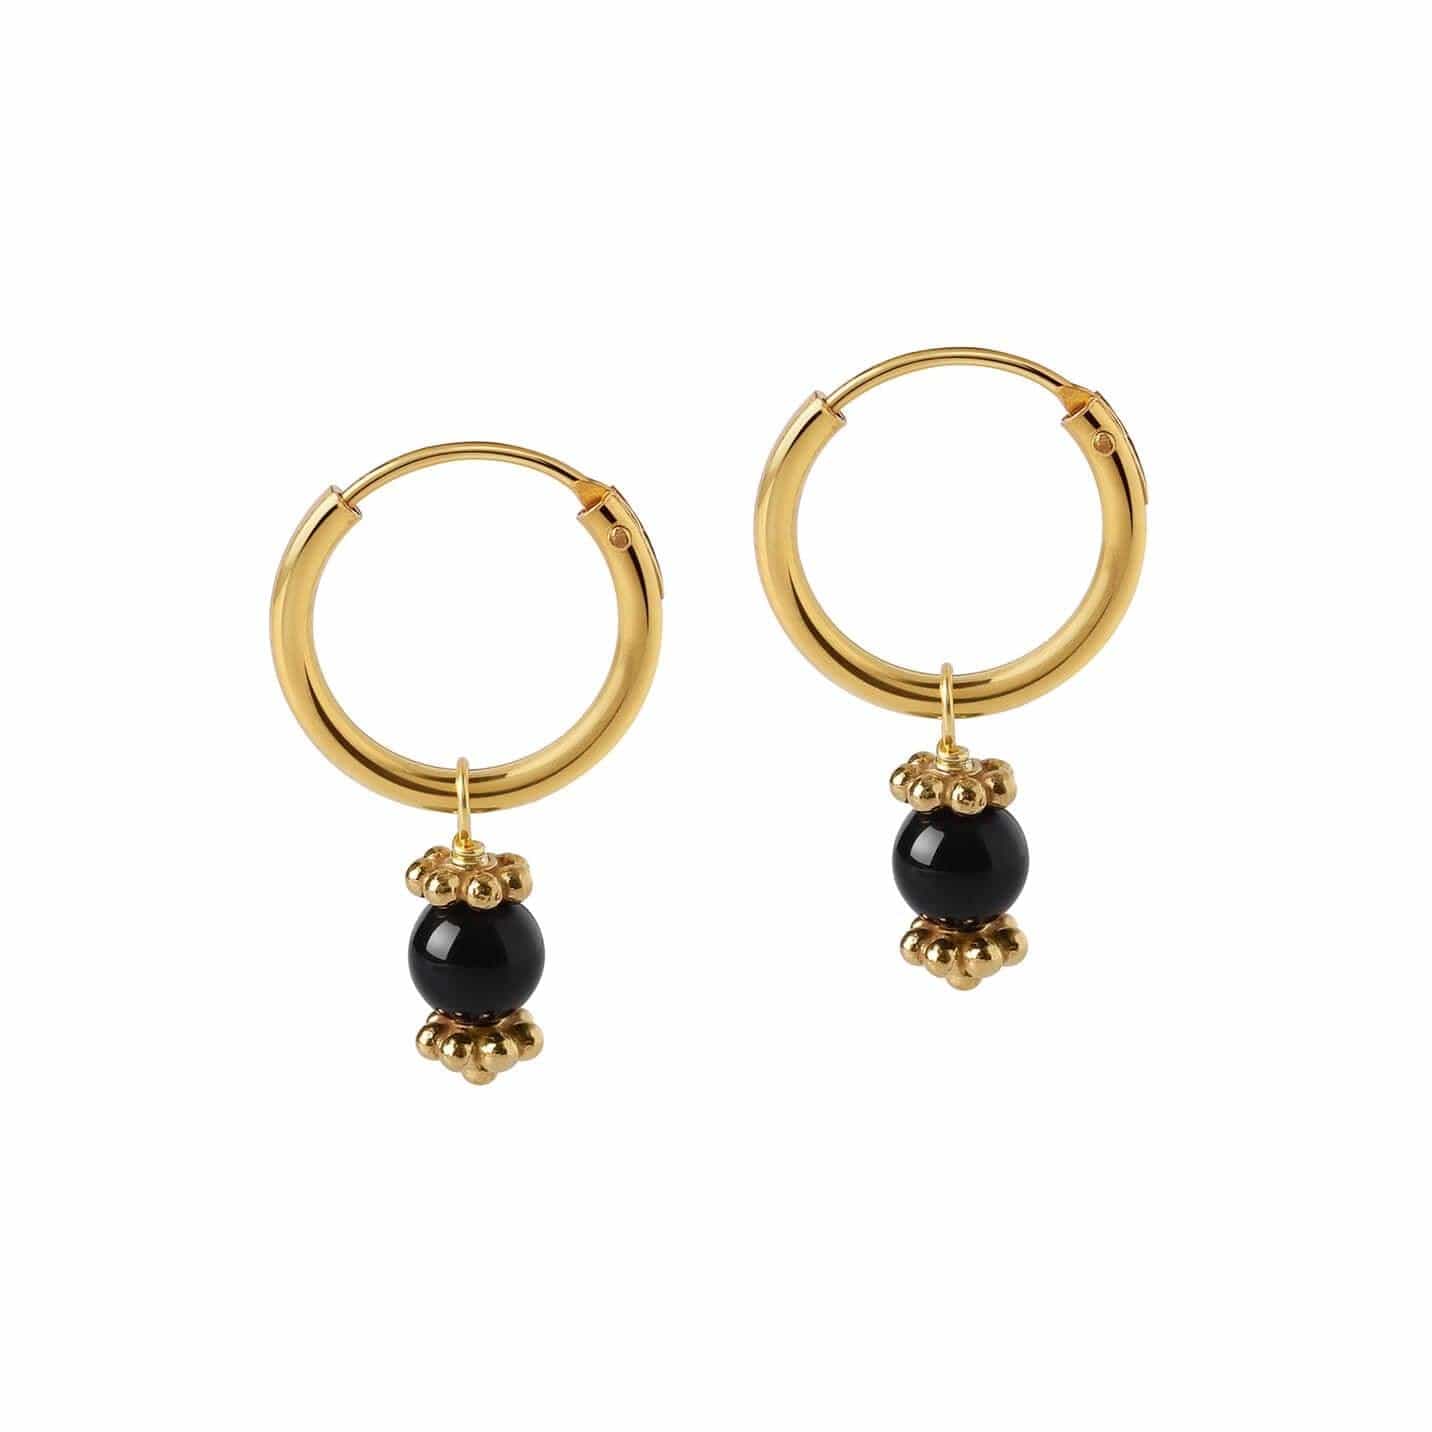 Gold Plated Hoop Earrings with Black Onyx